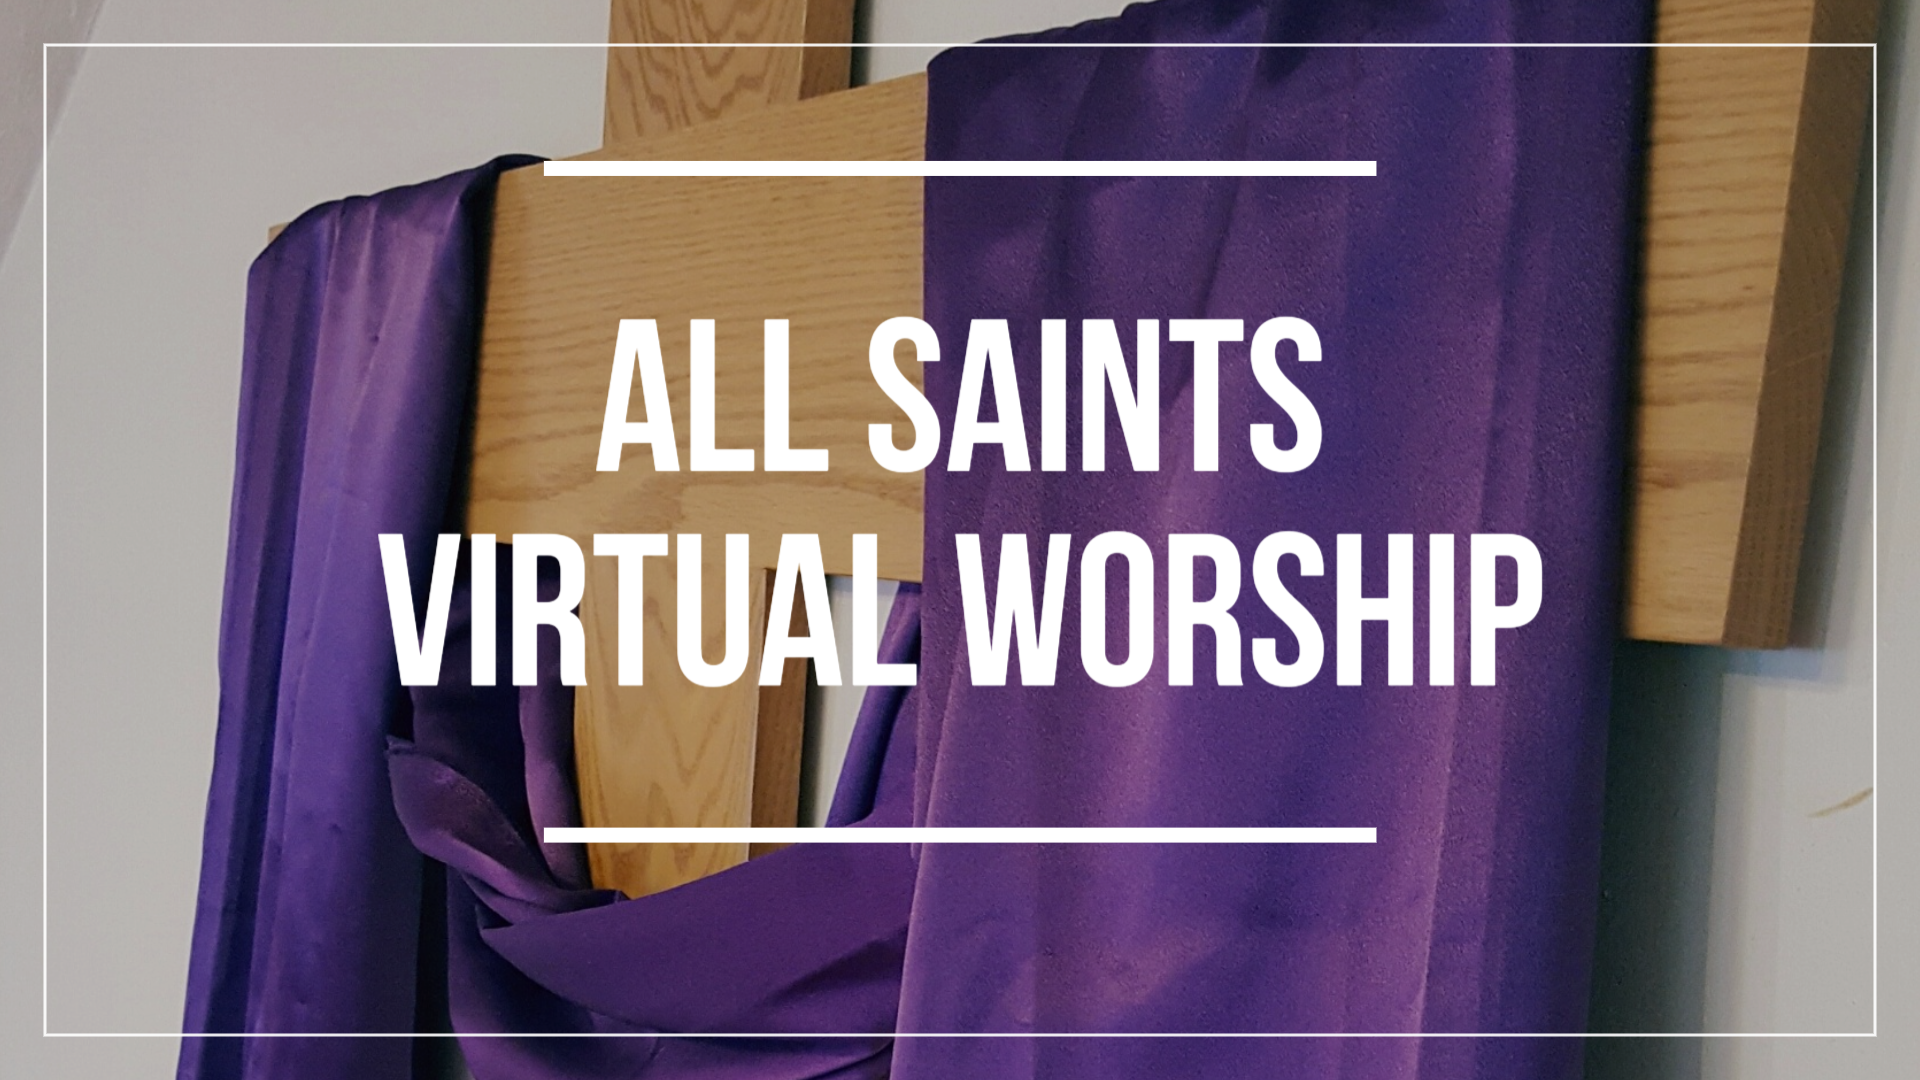 All Saints Virtual Worship - The Talent